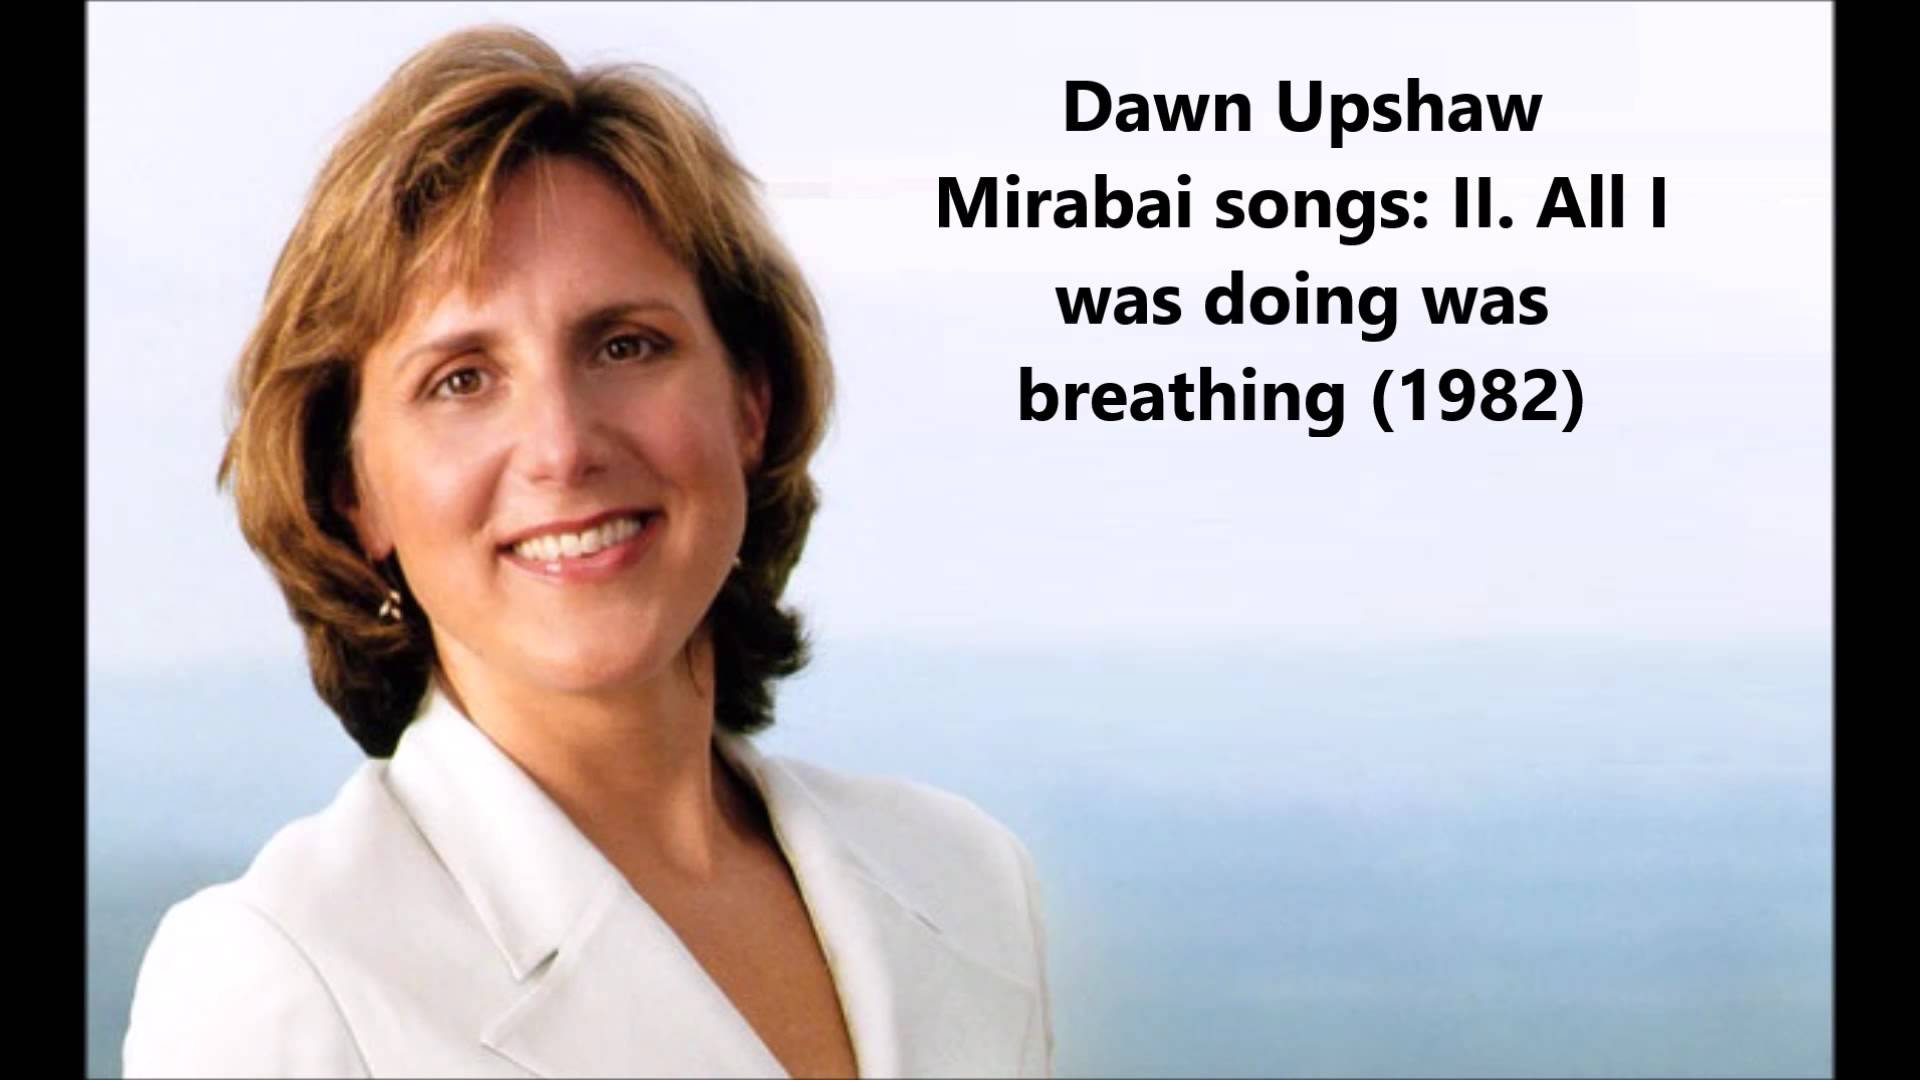 John Harbison:  Mirabai Songs